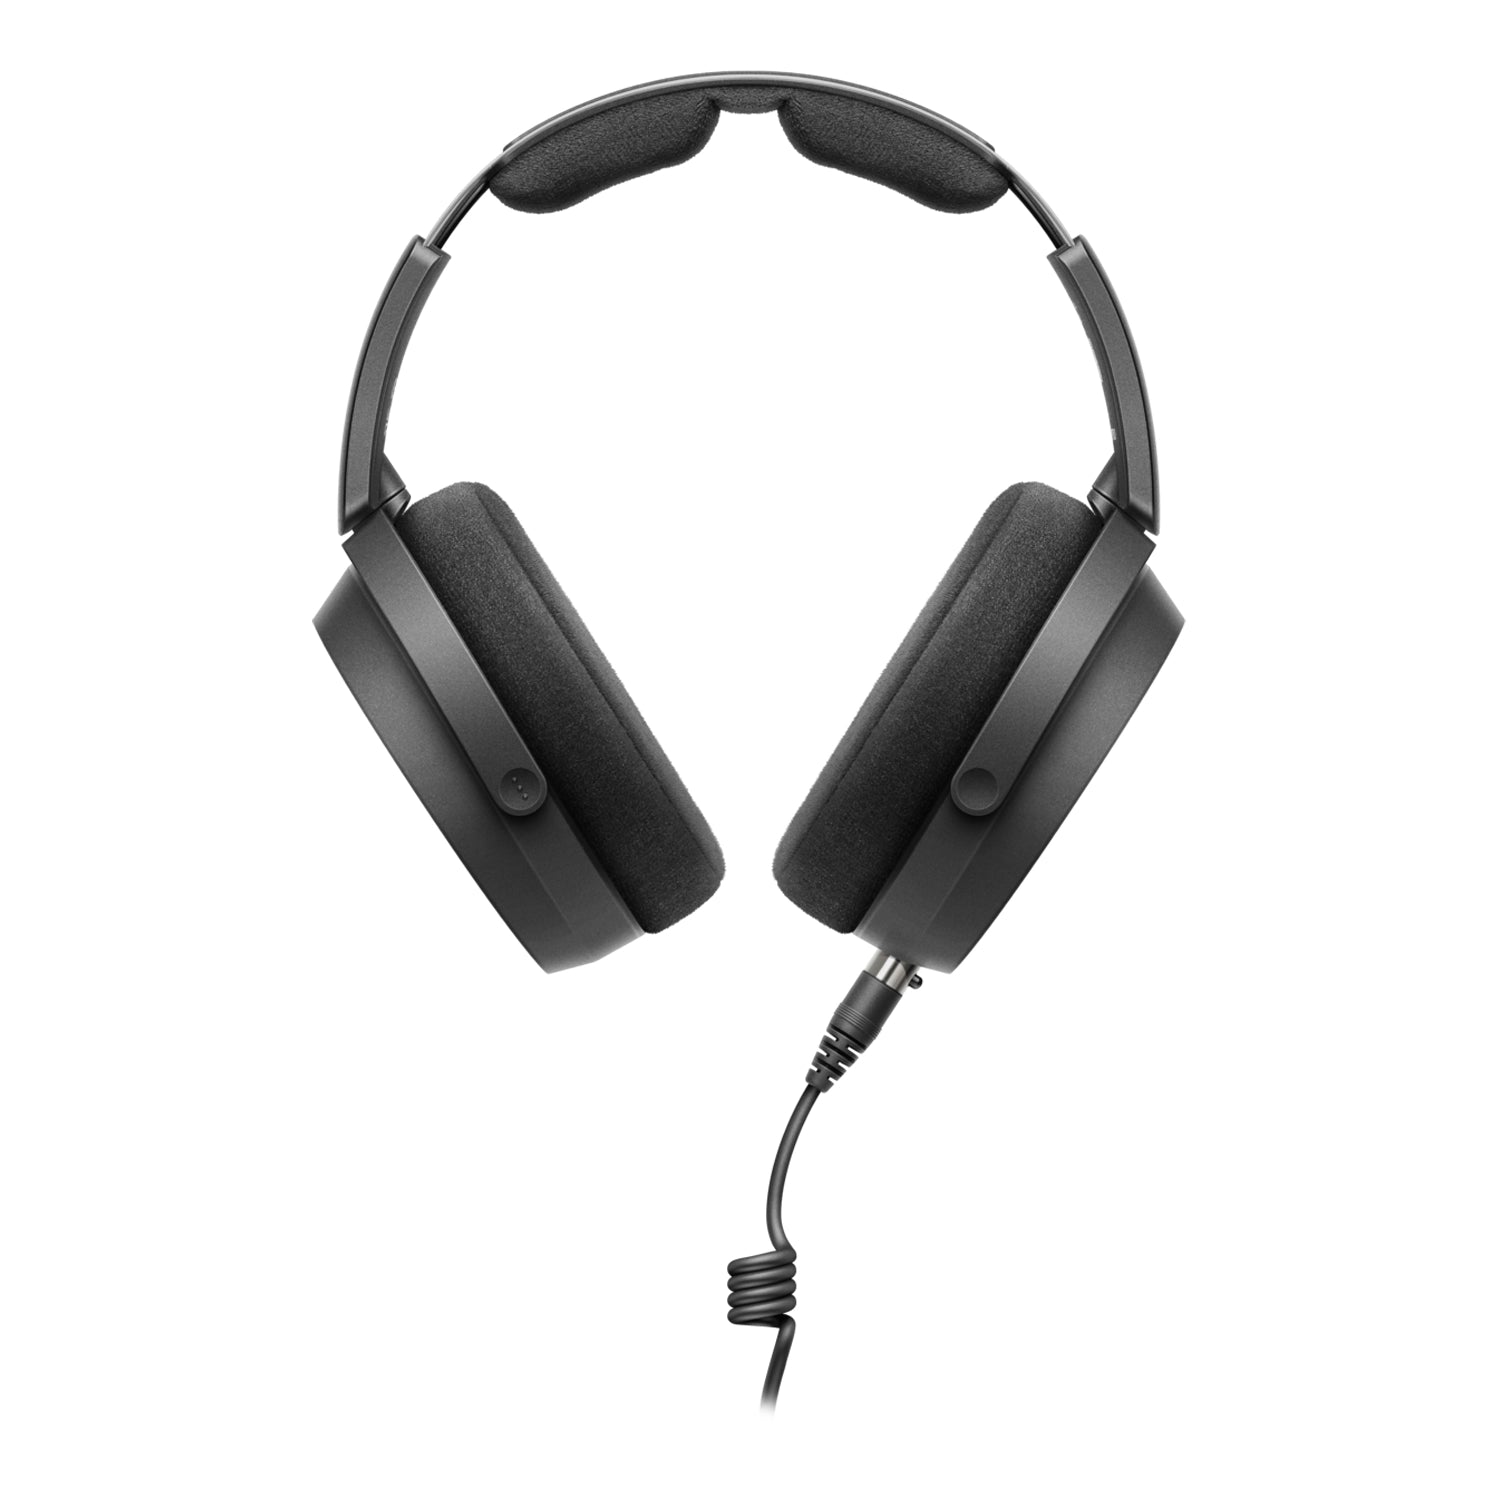 Sennheiser HD-490 Pro + Reference Open-Back Studio Headphones